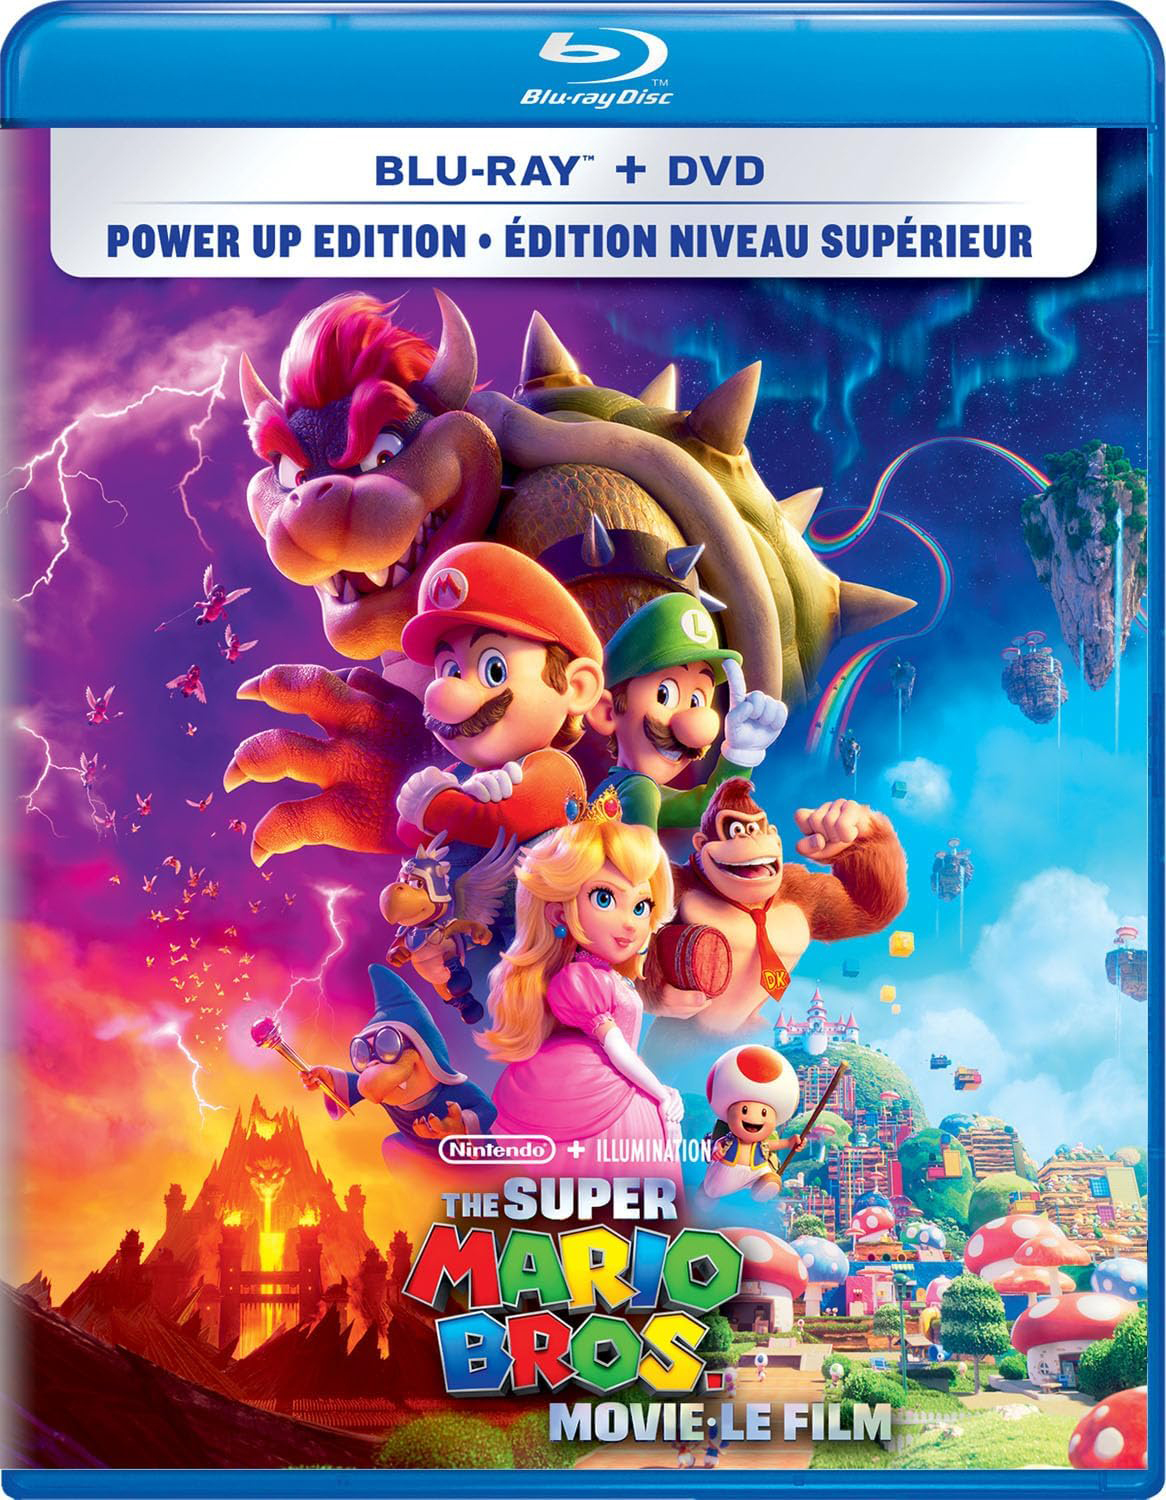 The Super Mario Bros. on Blu-ray & DVD